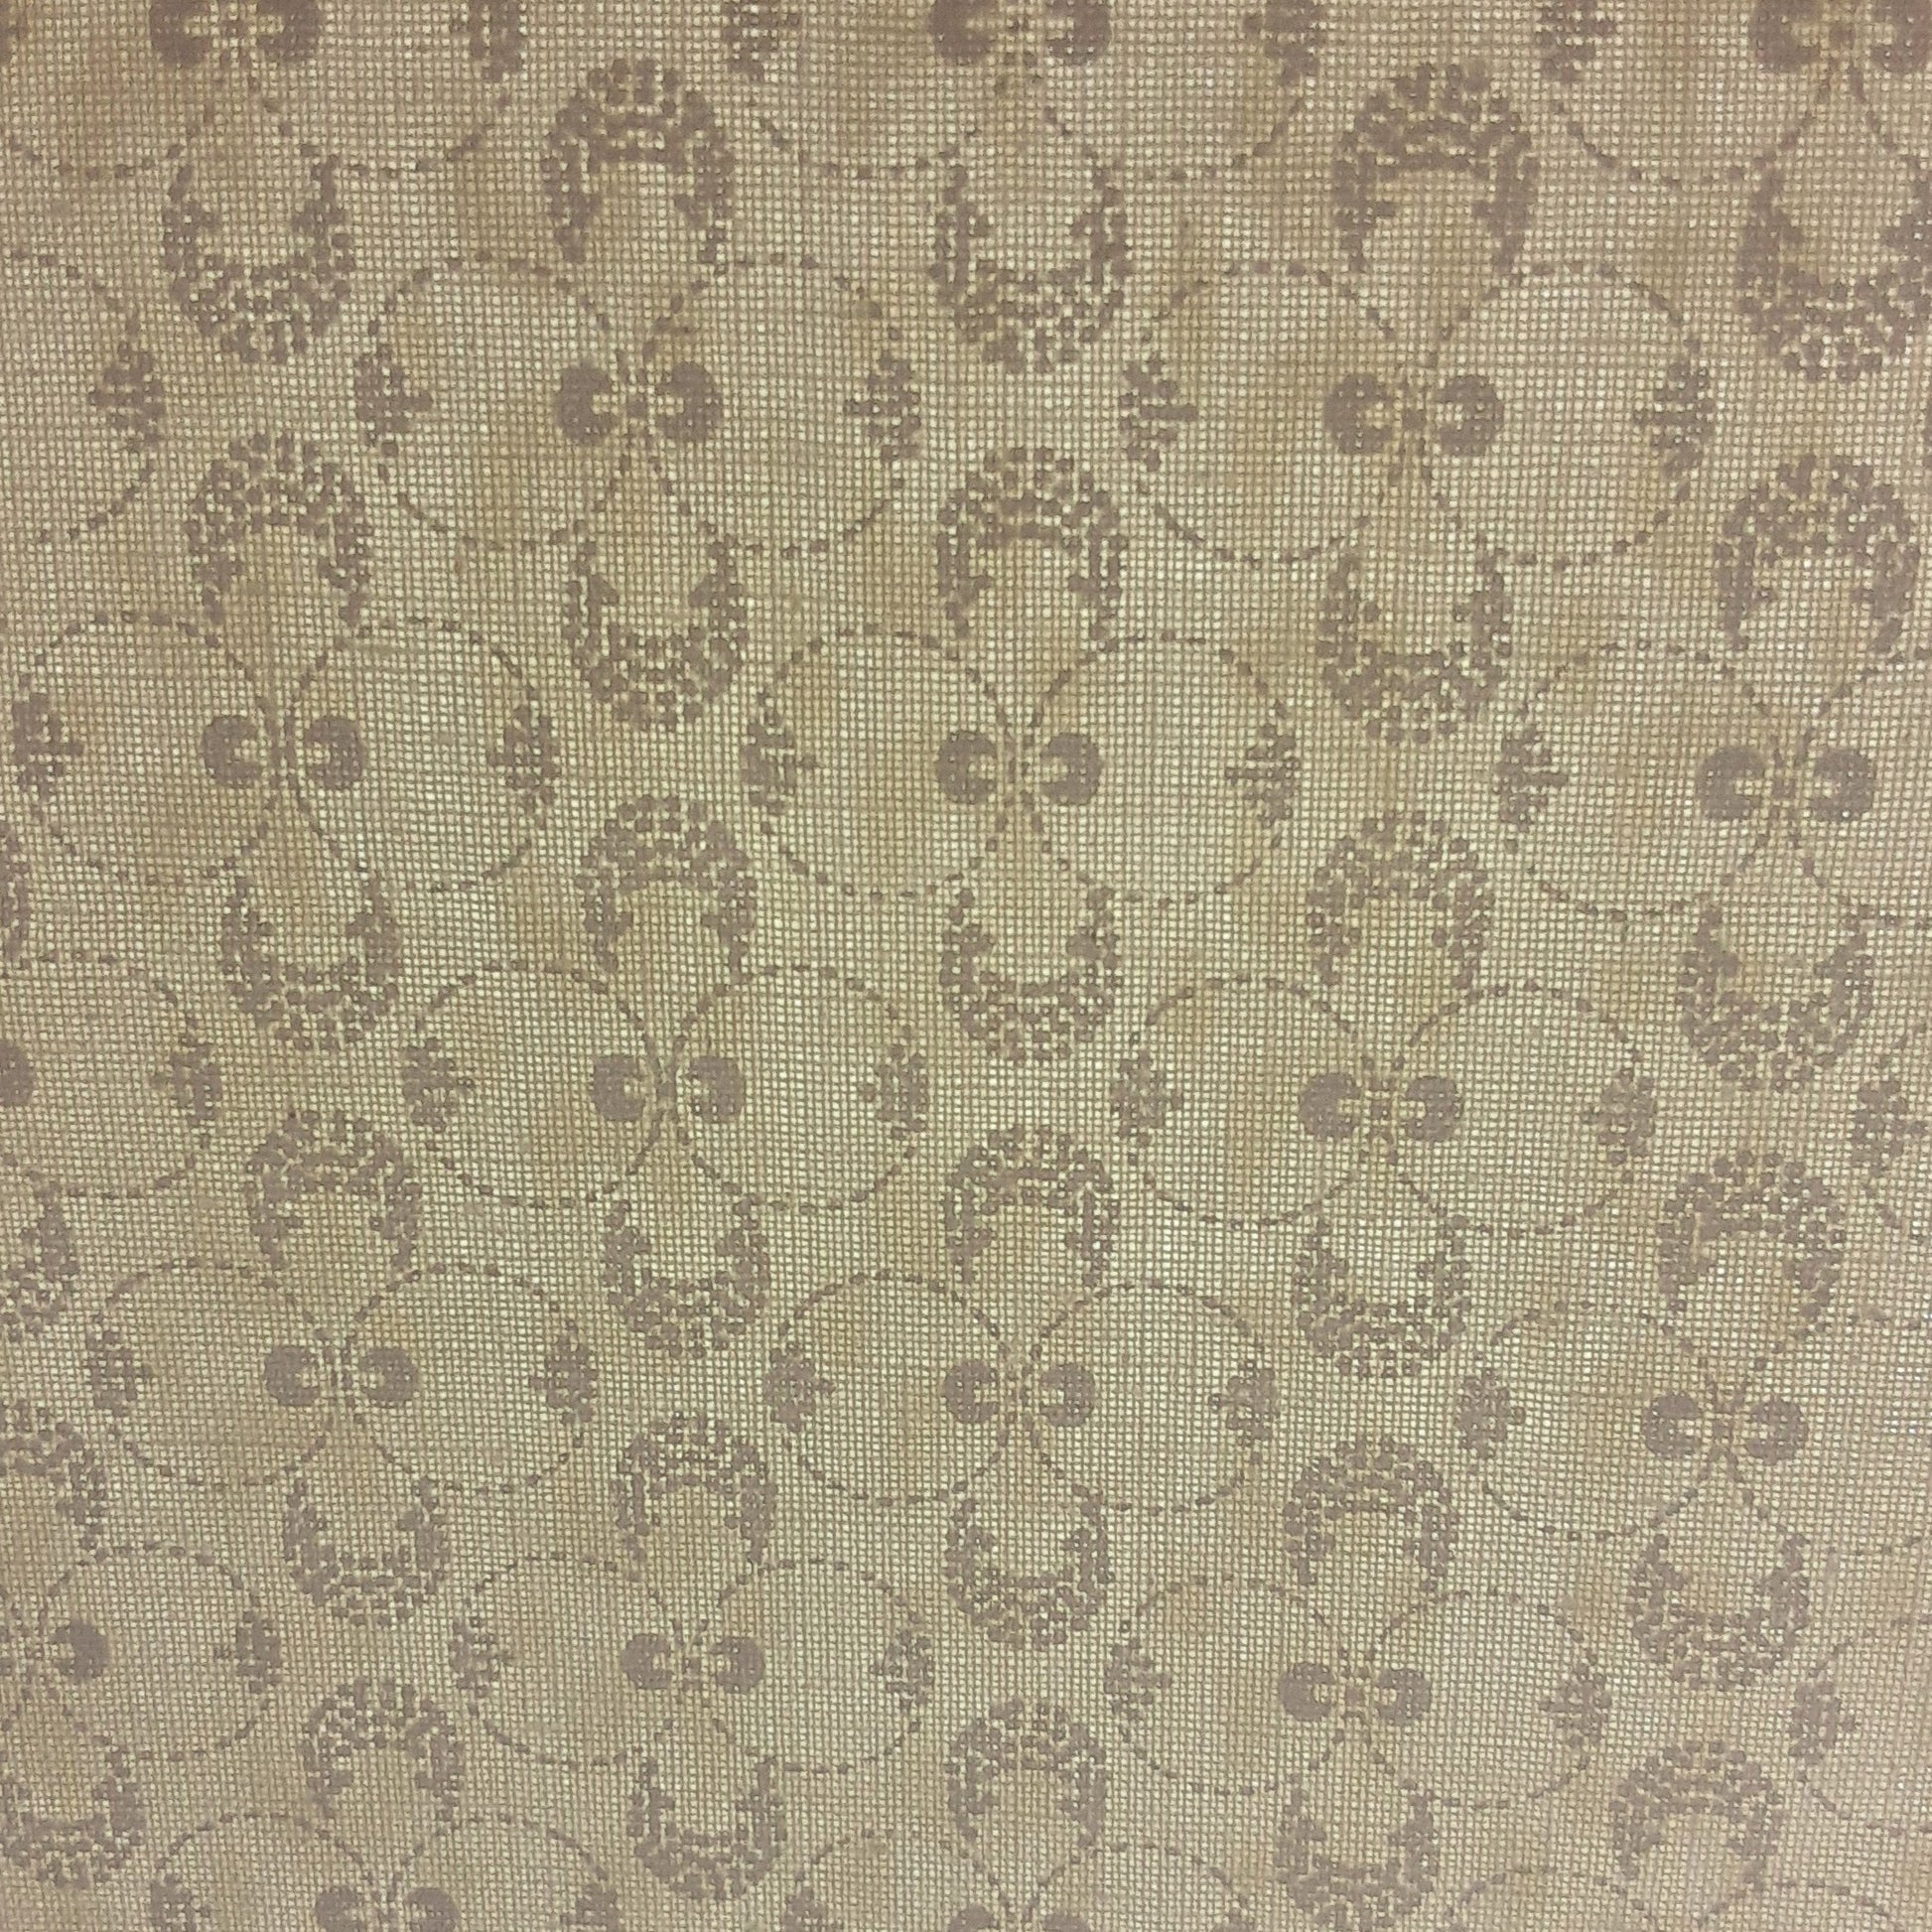 Ivory #U81 Clover Tonal Woven Fabric - SKU 5803B